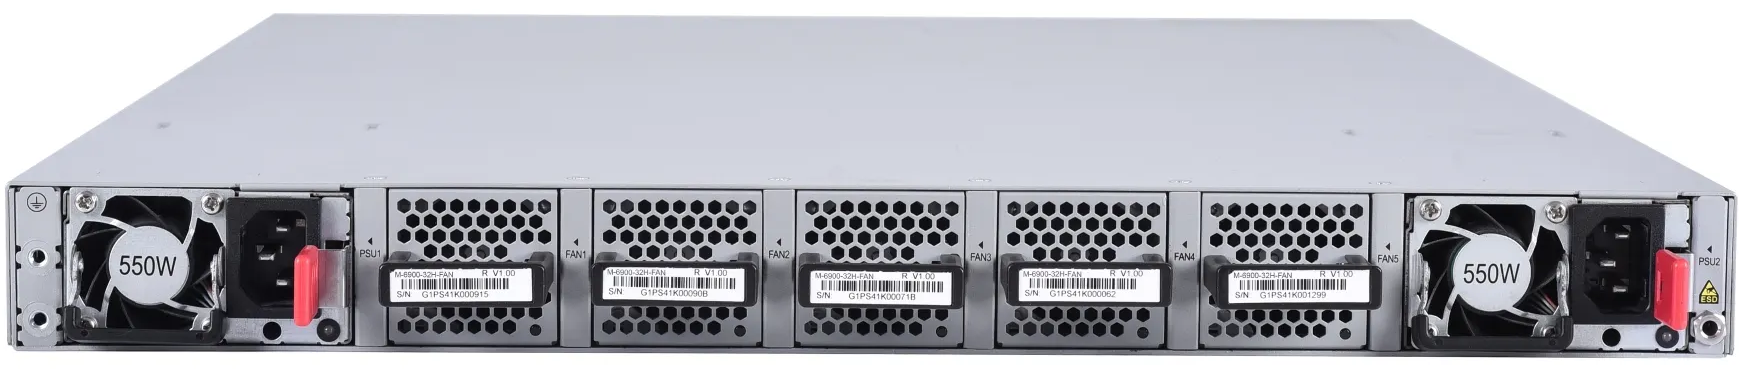 QTECH QSW-6900-32H | Ethernet-коммутатор ЦОД